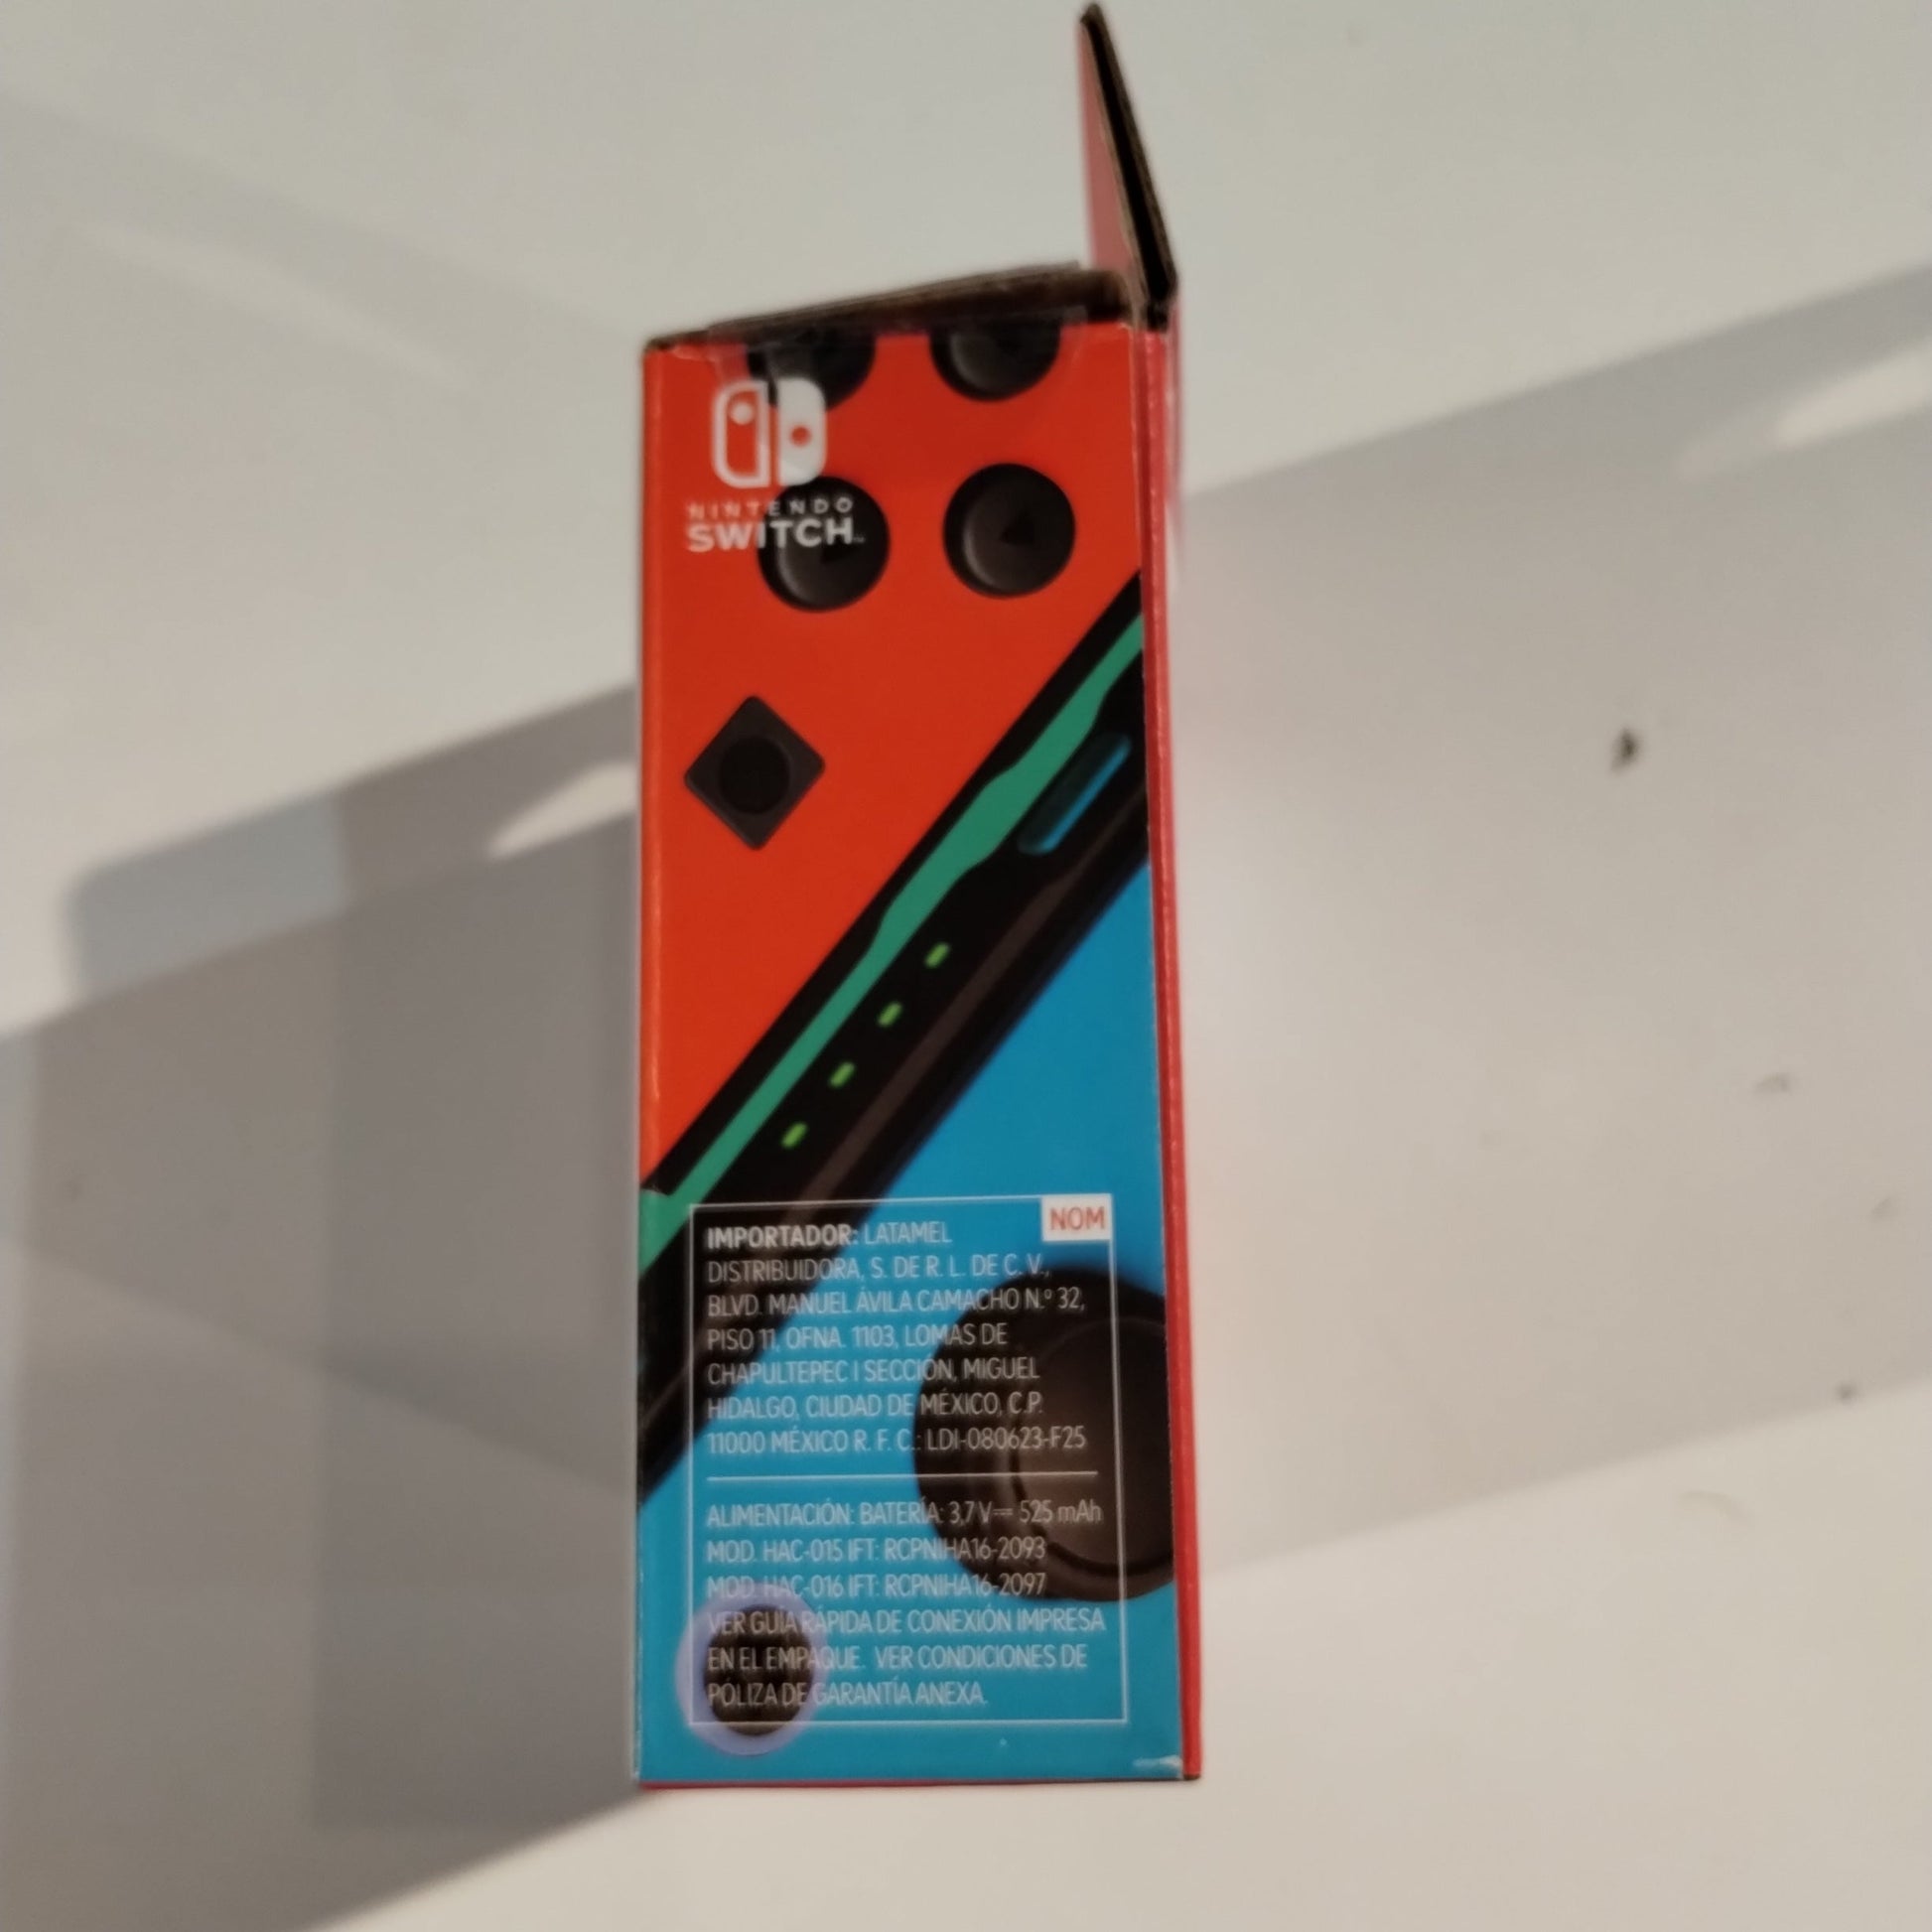 Nintendo Joy-Con Controller - Blue/ Red Bluetooth Wireless Controller Like New in Box